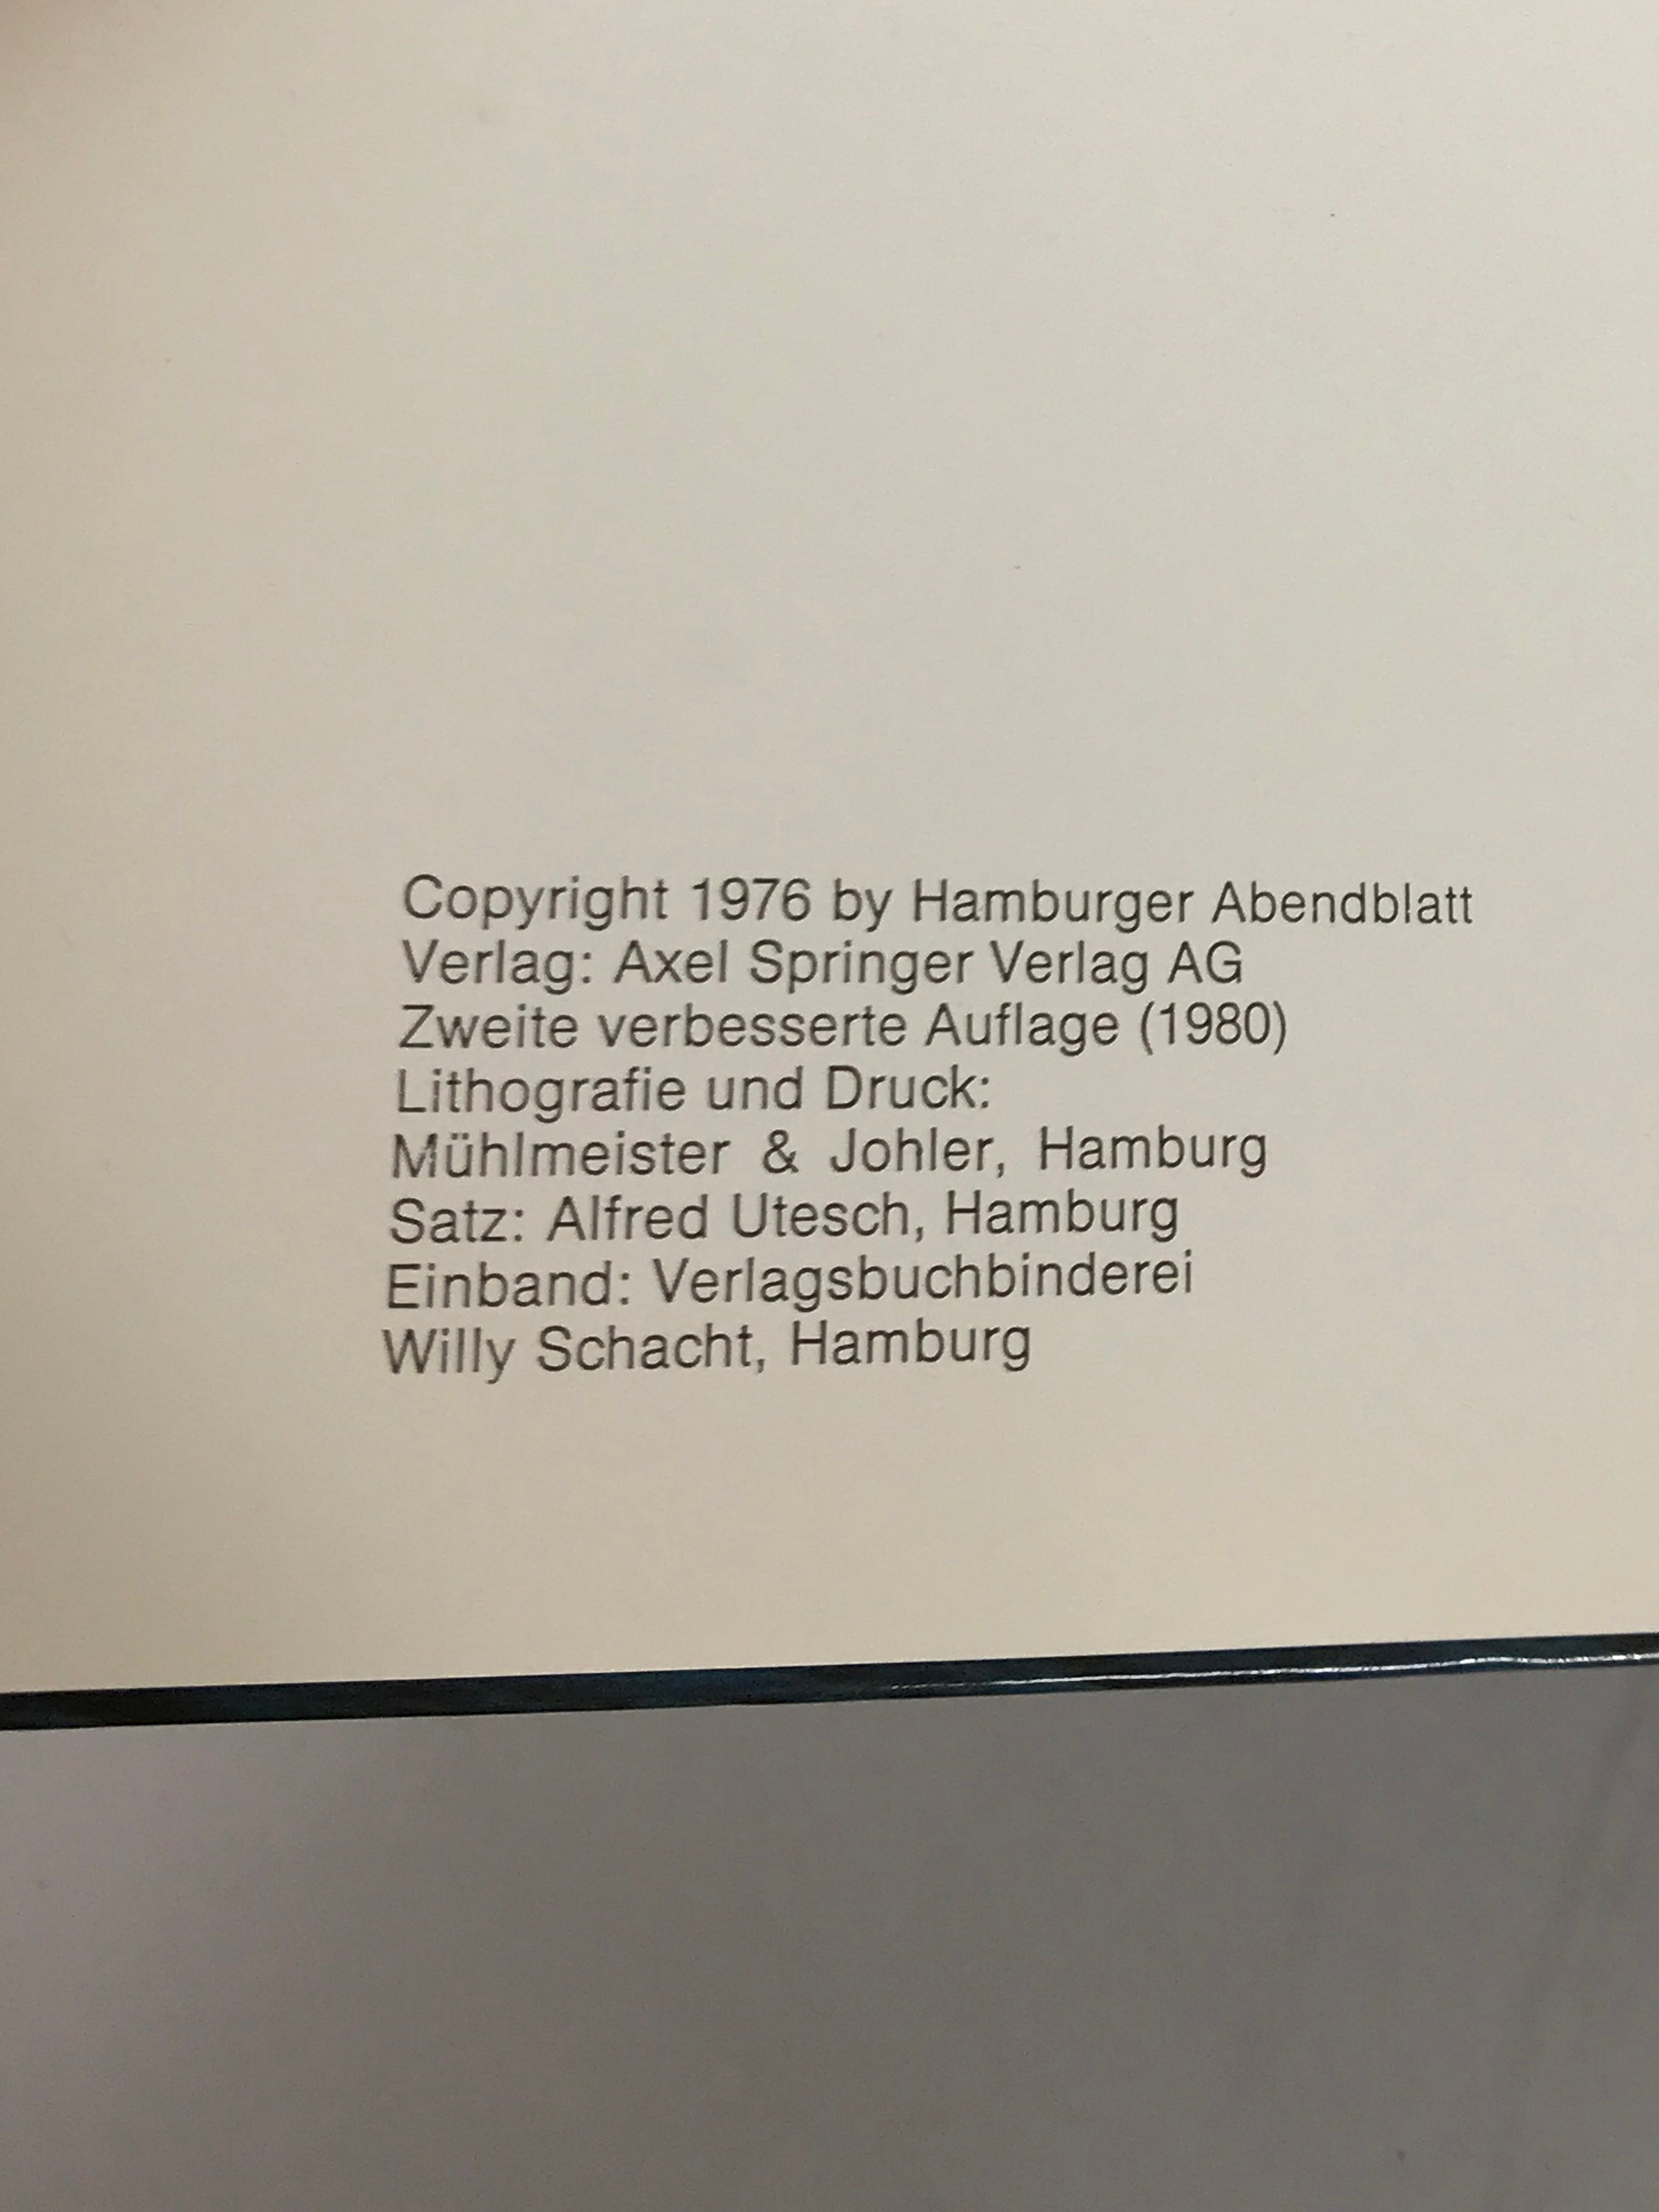 Lot of 2 German Tourism Books: So Schon is Hamburg (Delightful Hamburg) and Der Kolner Dom (The Cologne Cathedral) 1966-1976 HC SC DJ